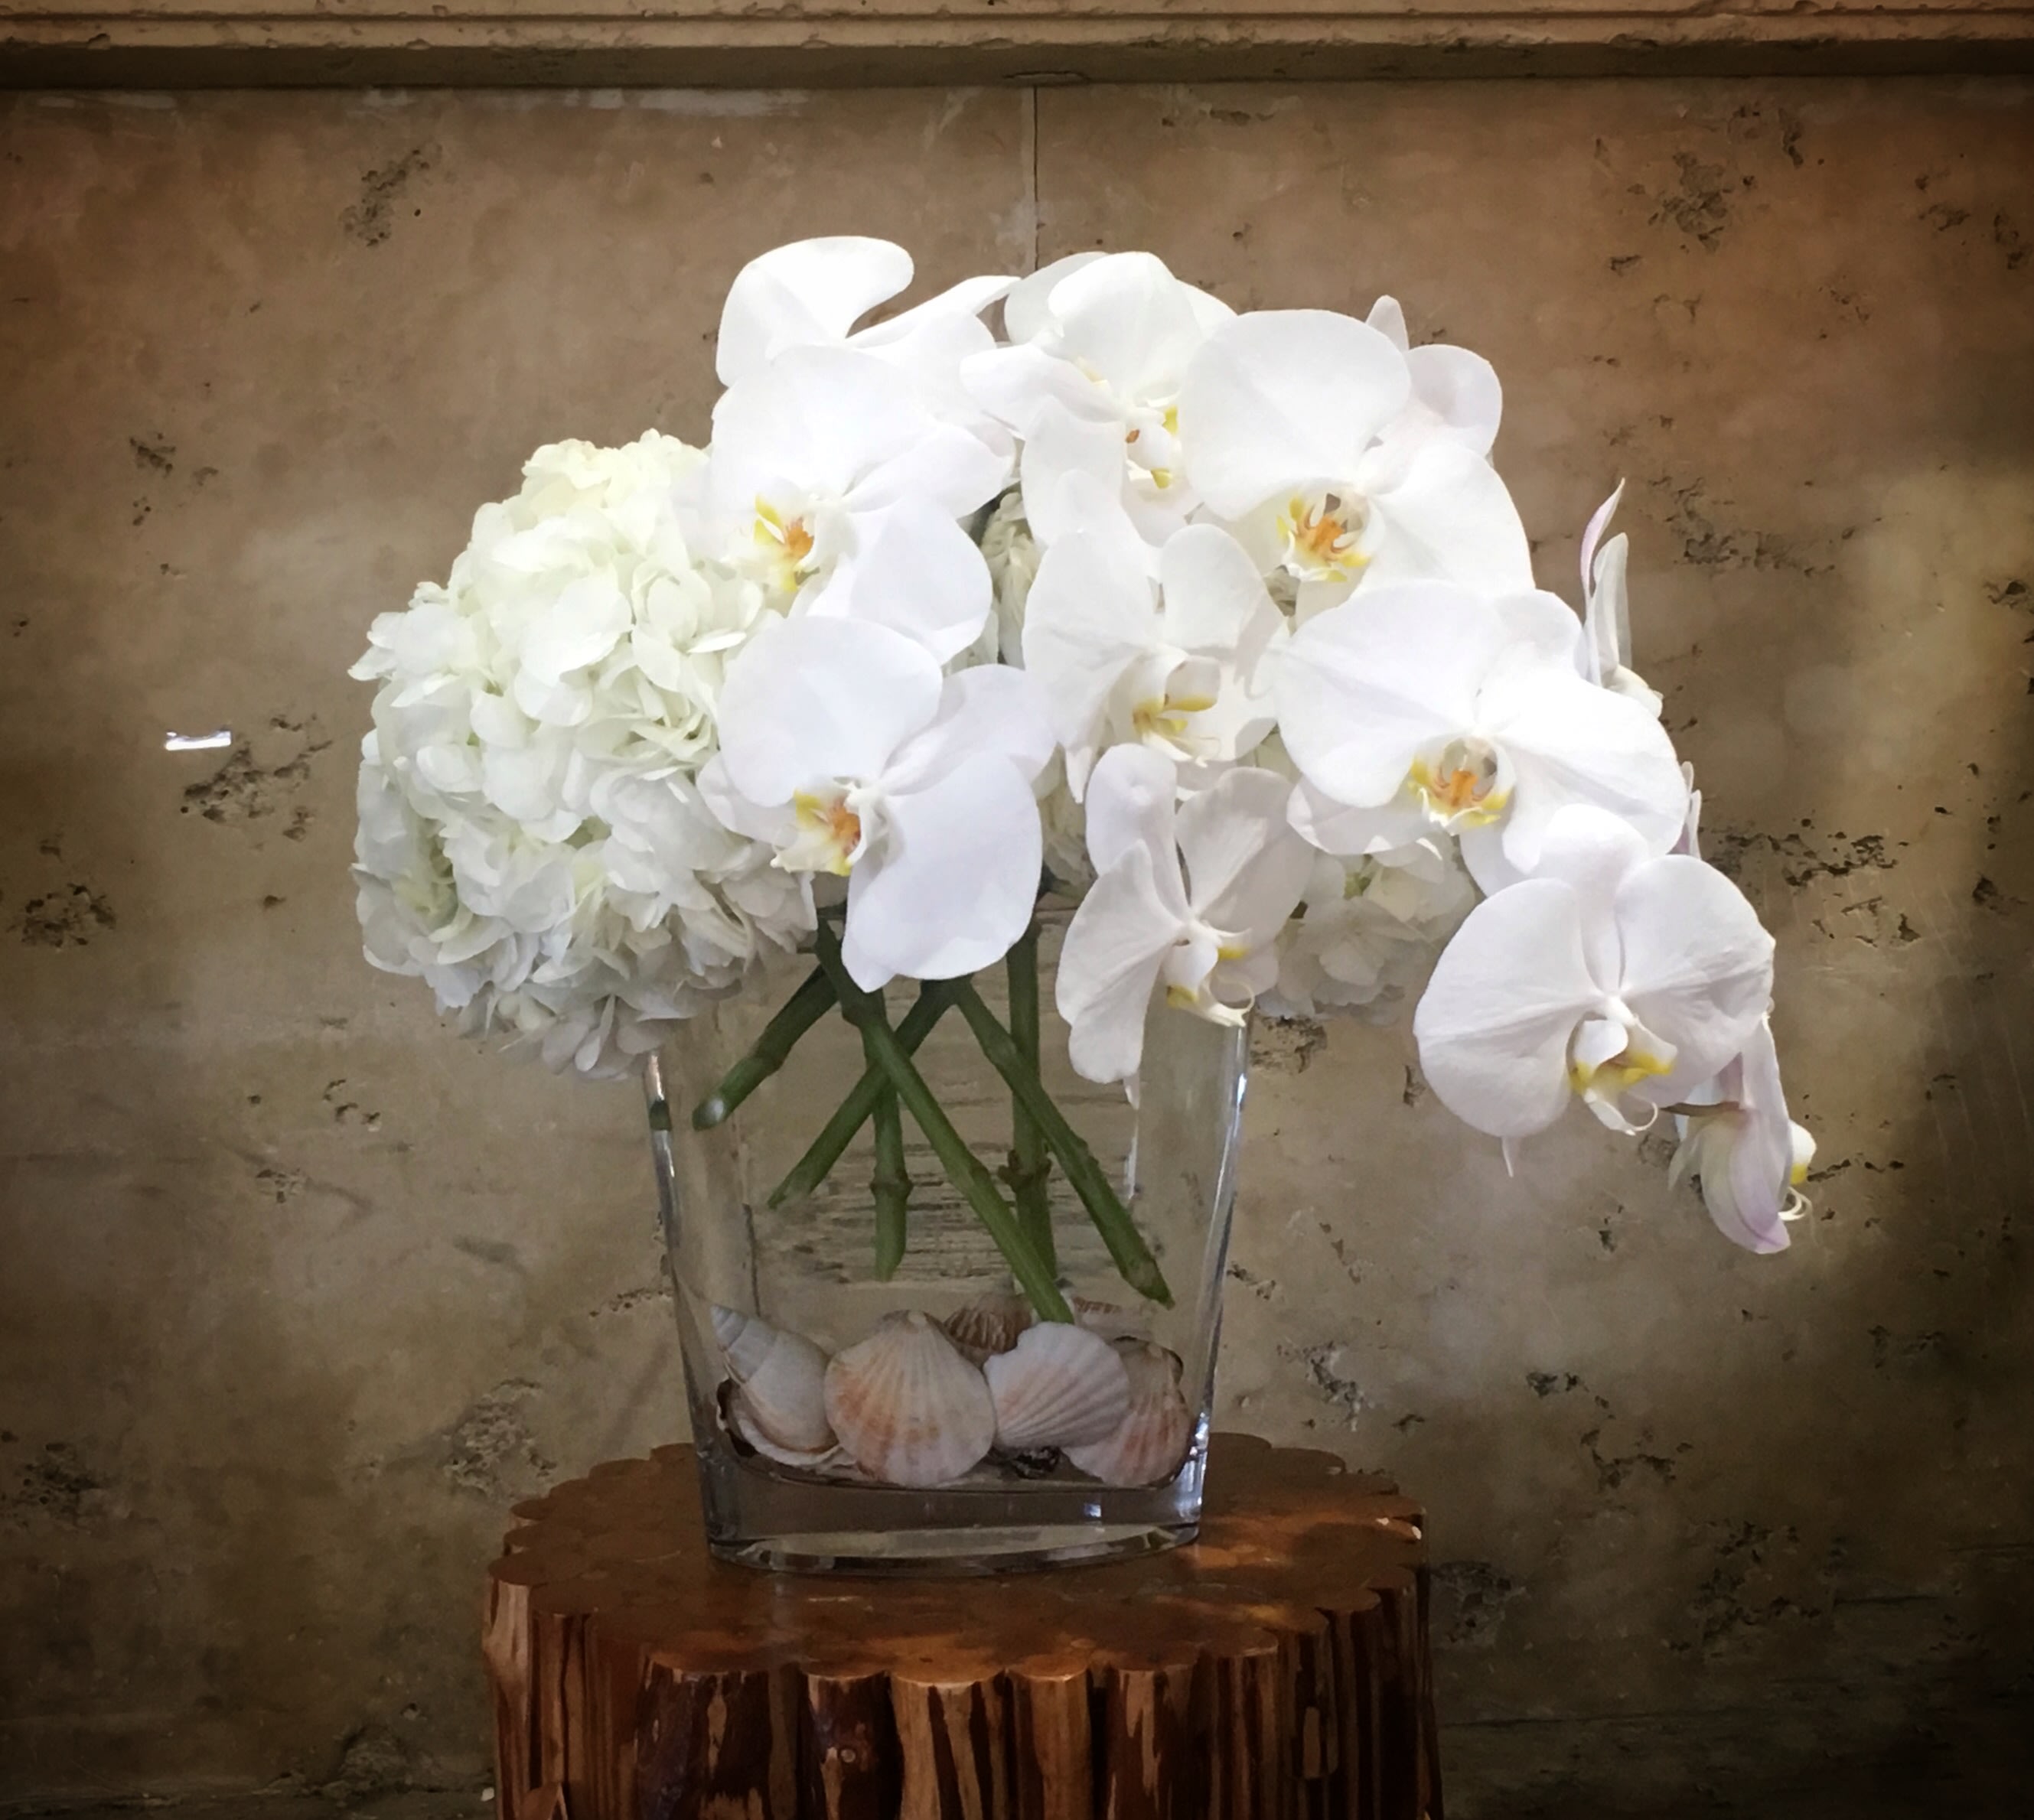 Malibu Beach - 3 stems Premium Phalaenopsis Orchid, Hydrangeas in glass vase with sea shells. 